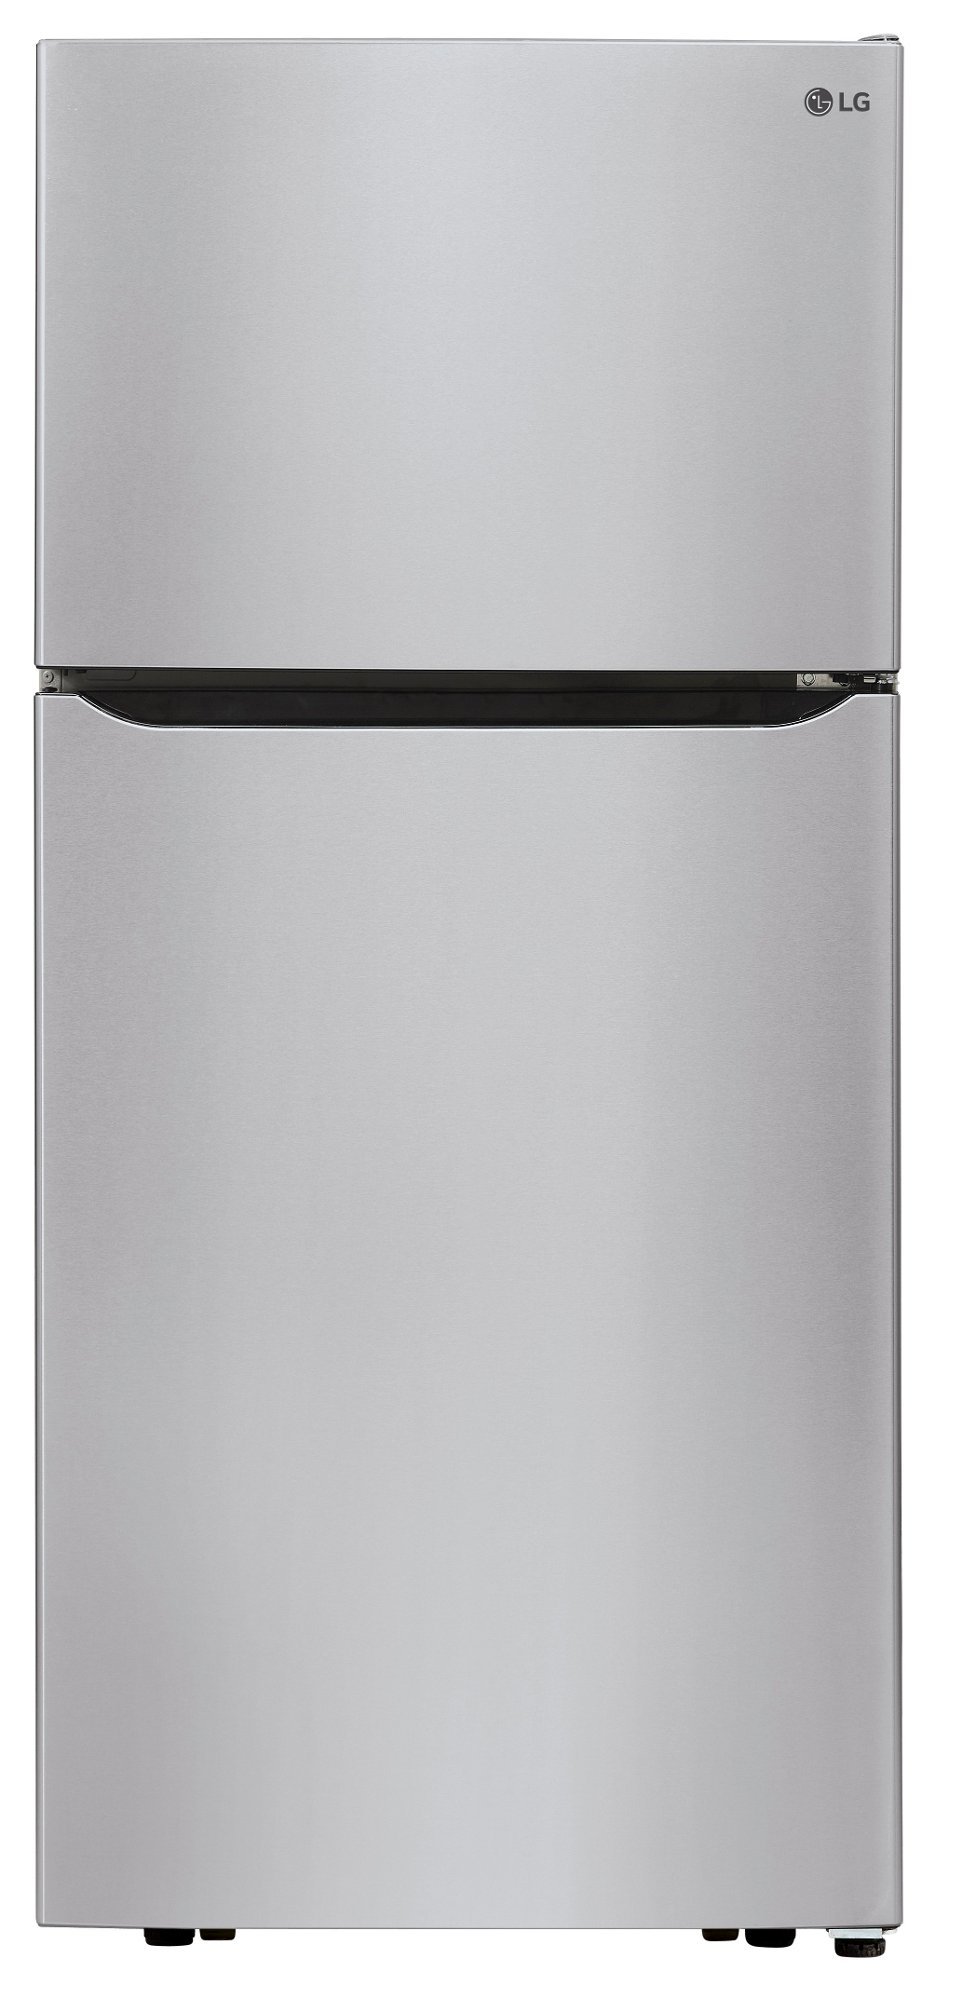 Stainless steel LG top freezer refrigerator